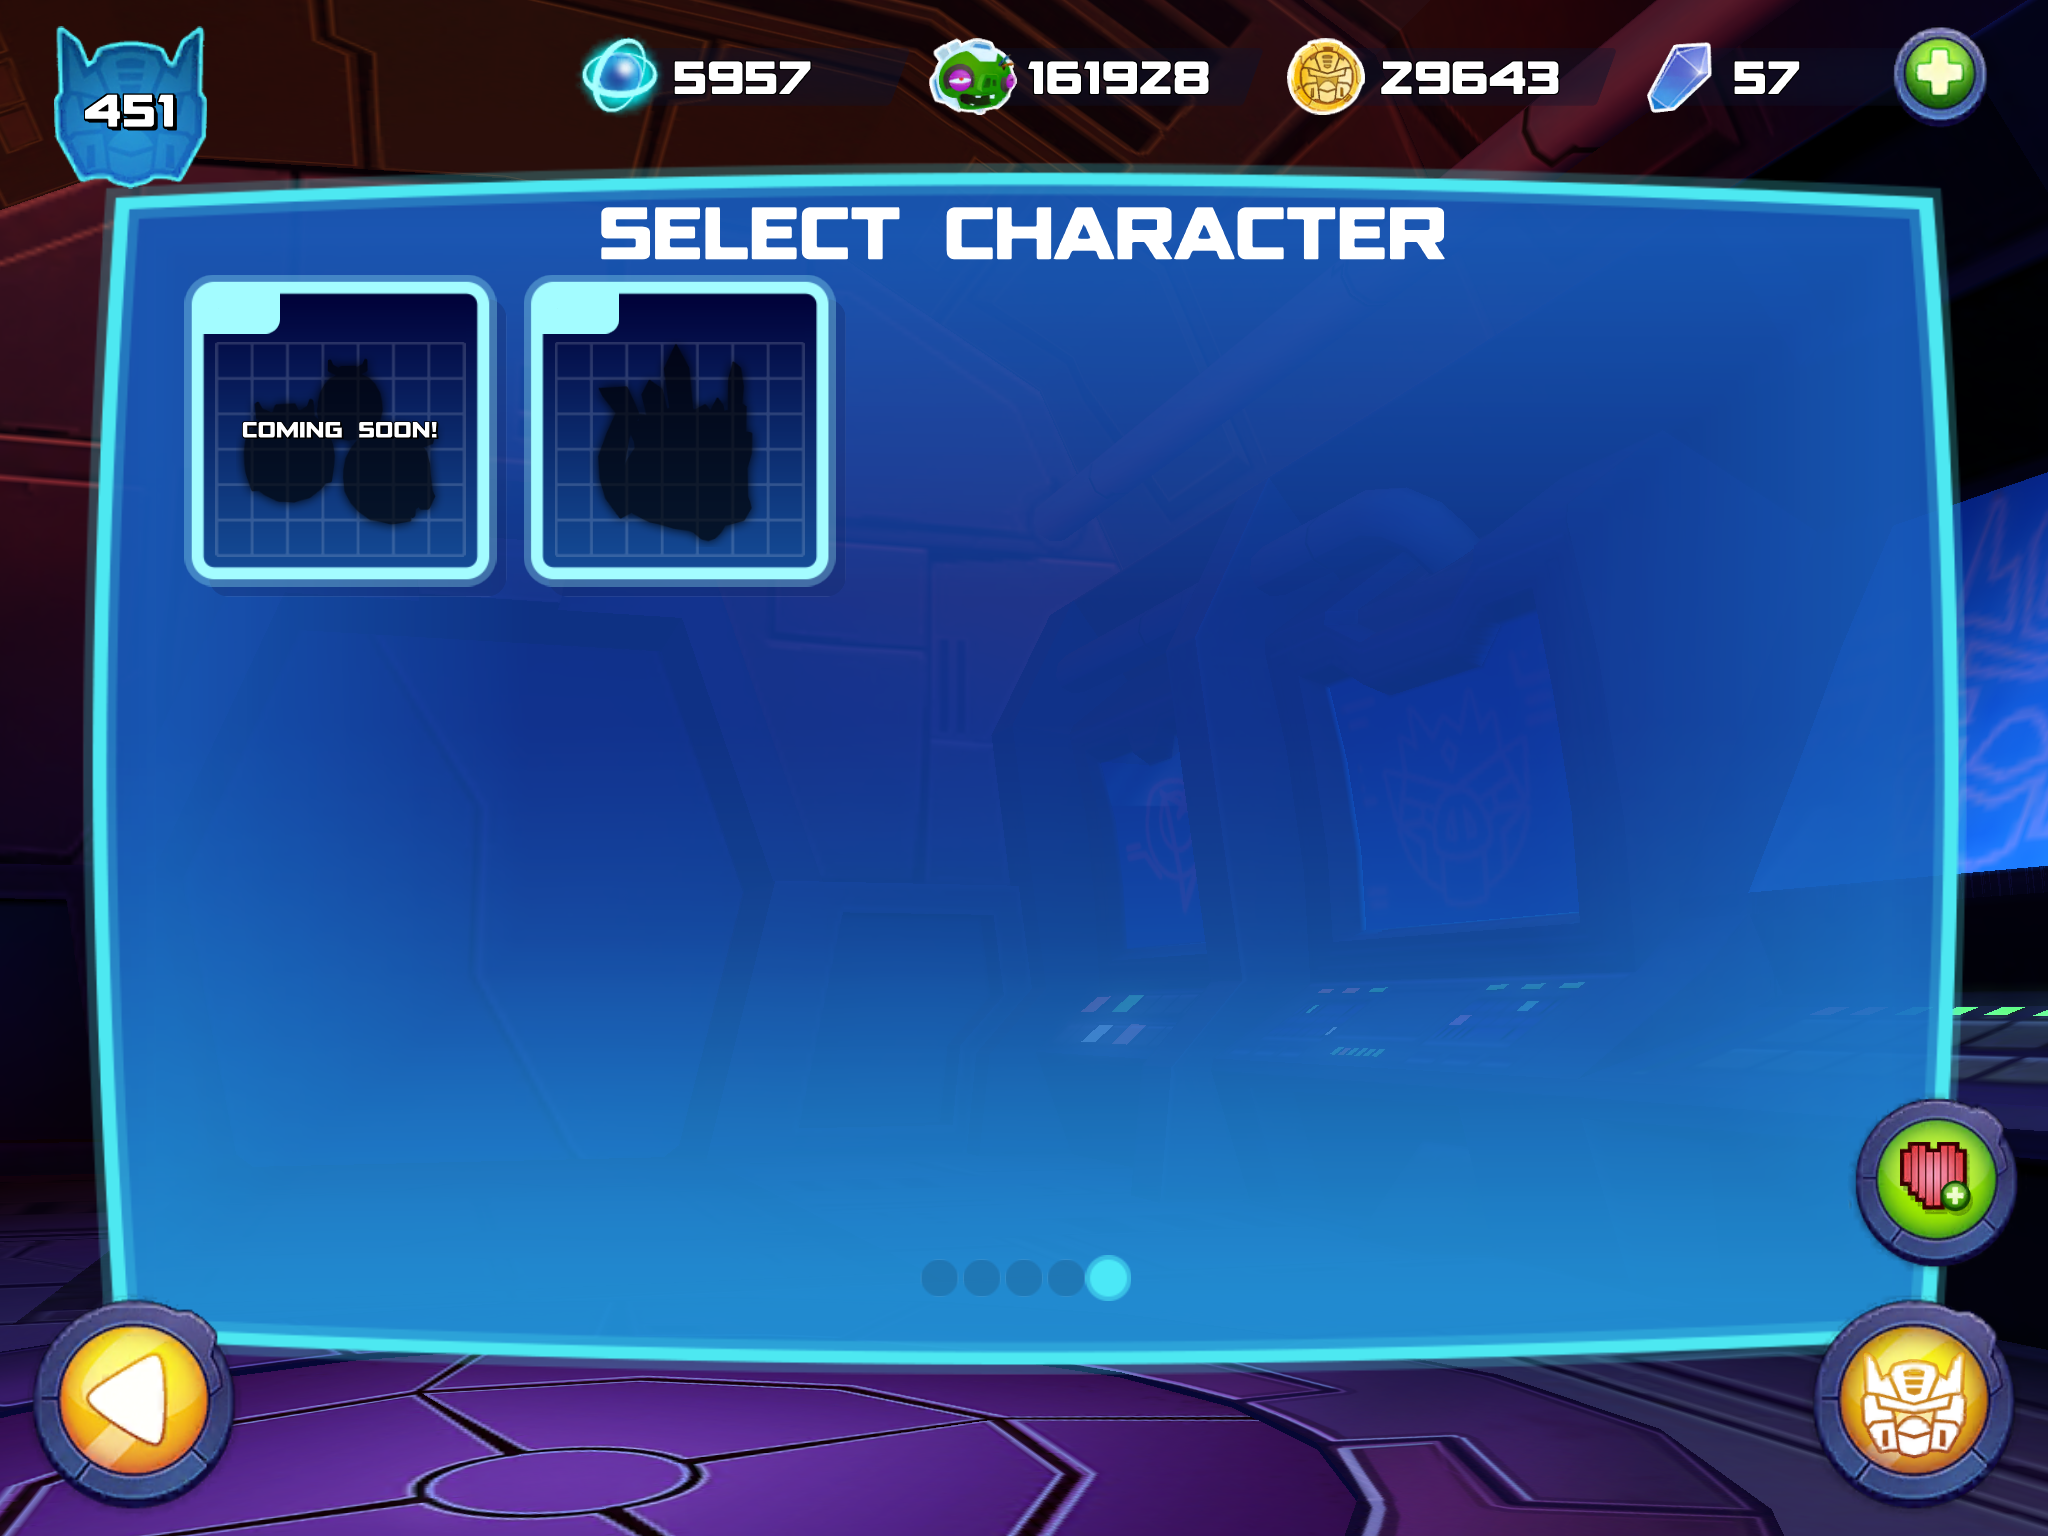 New character main menu